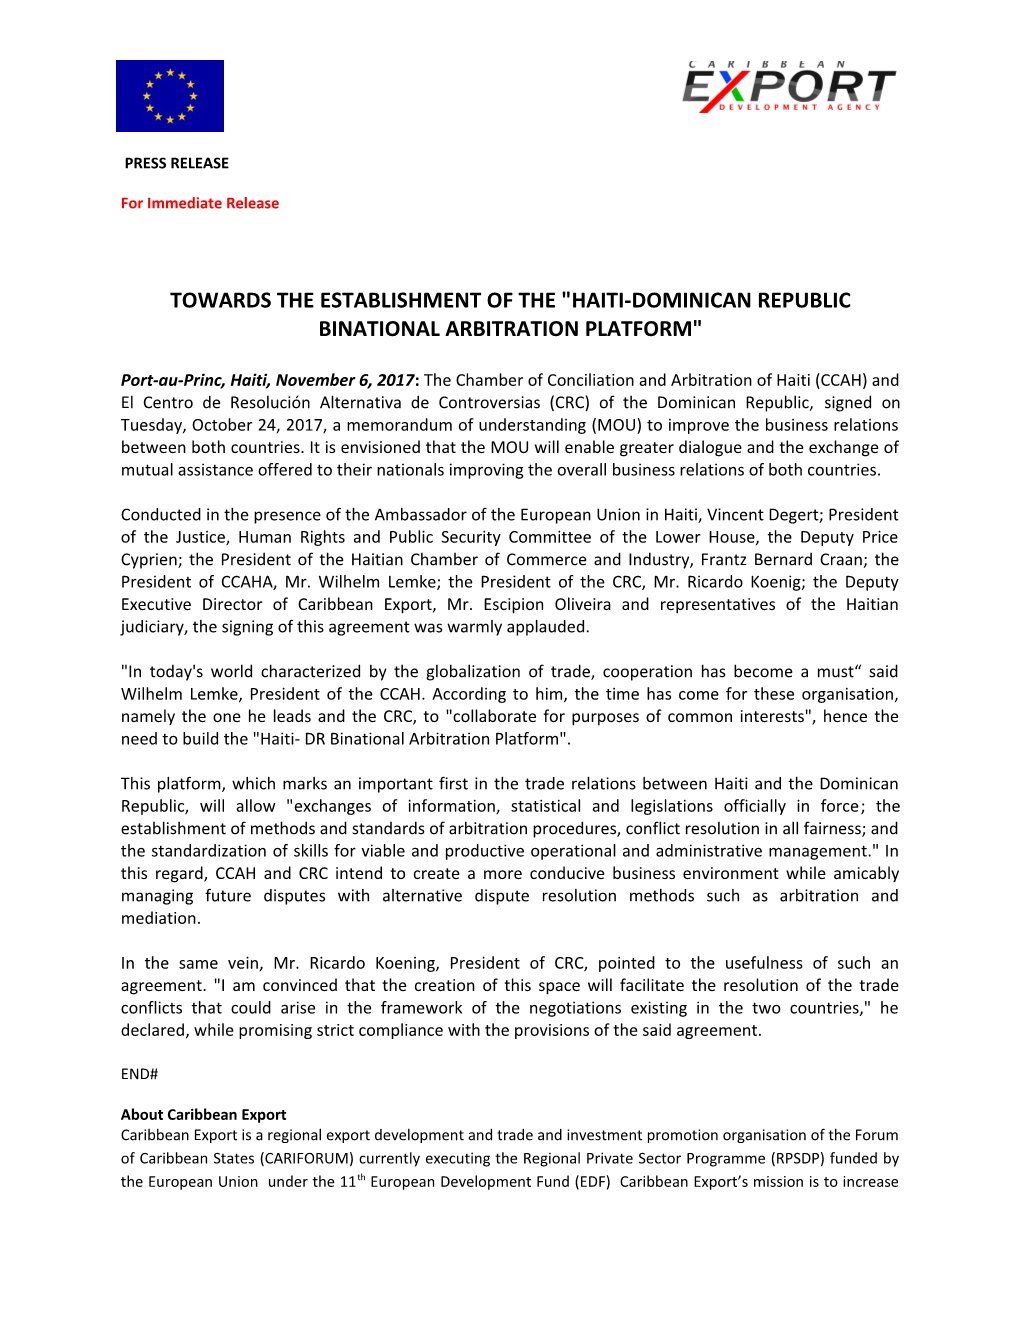 Towards the Establishment of the Haiti-Dominican Republic Binational Arbitration Platform